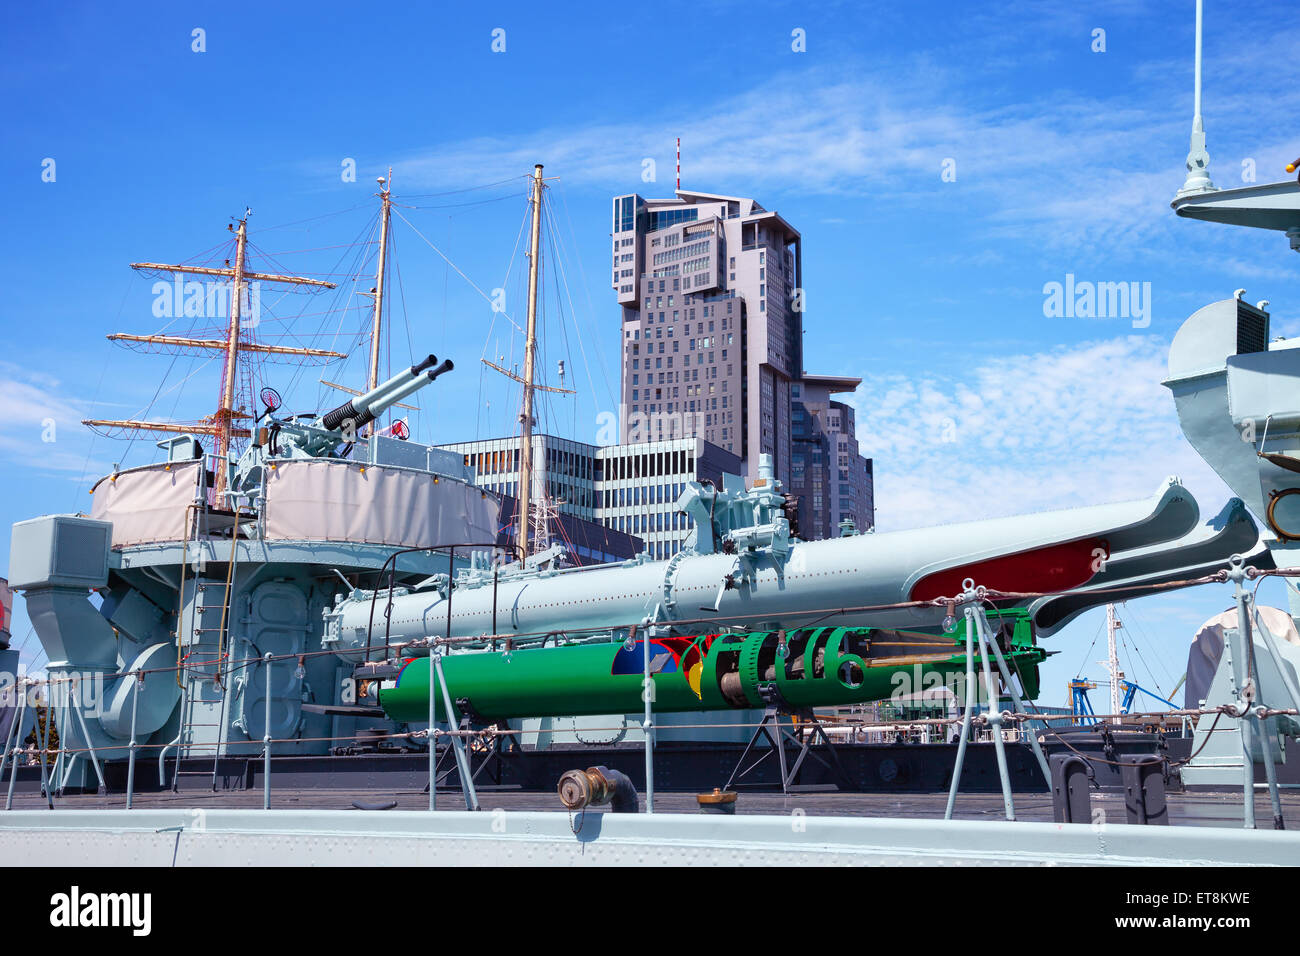 Torretta Mitragliatrice su una nave da guerra navale oltre il cielo blu. Foto Stock